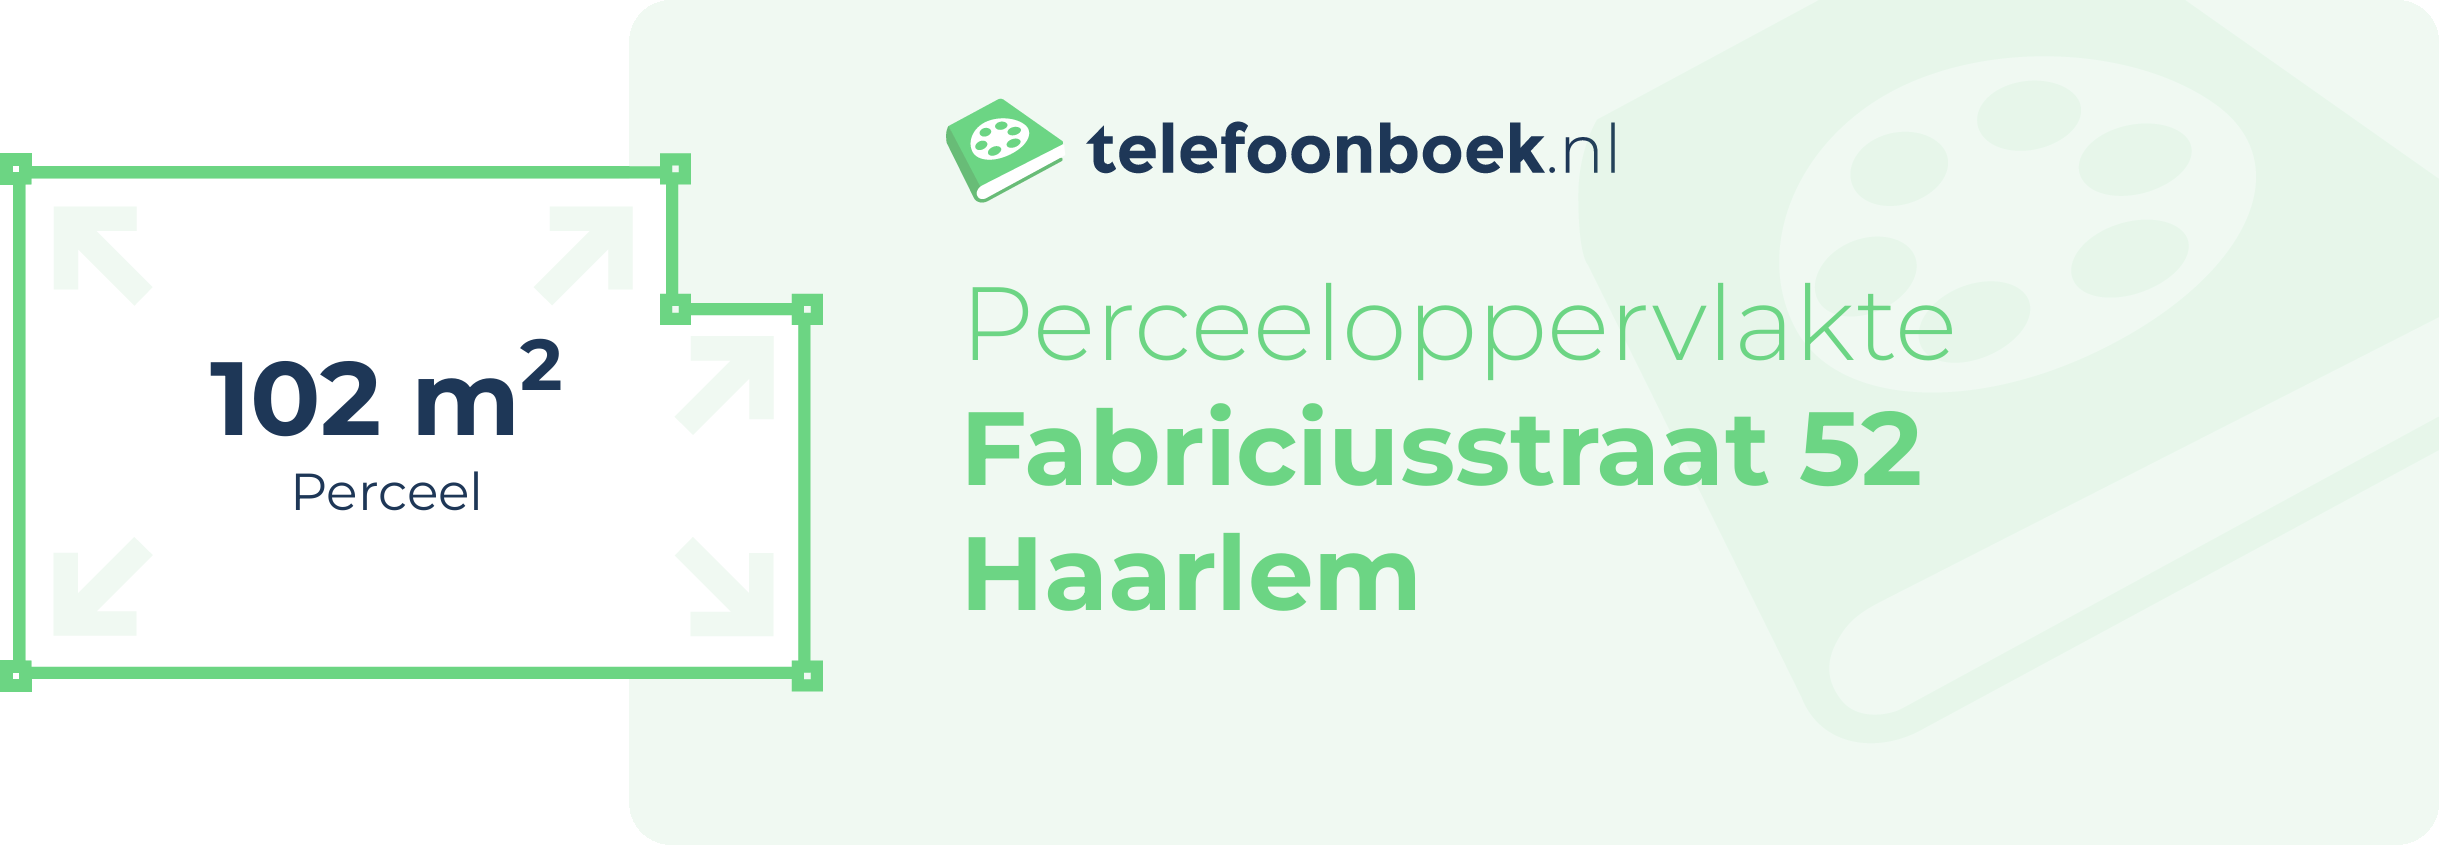 Perceeloppervlakte Fabriciusstraat 52 Haarlem